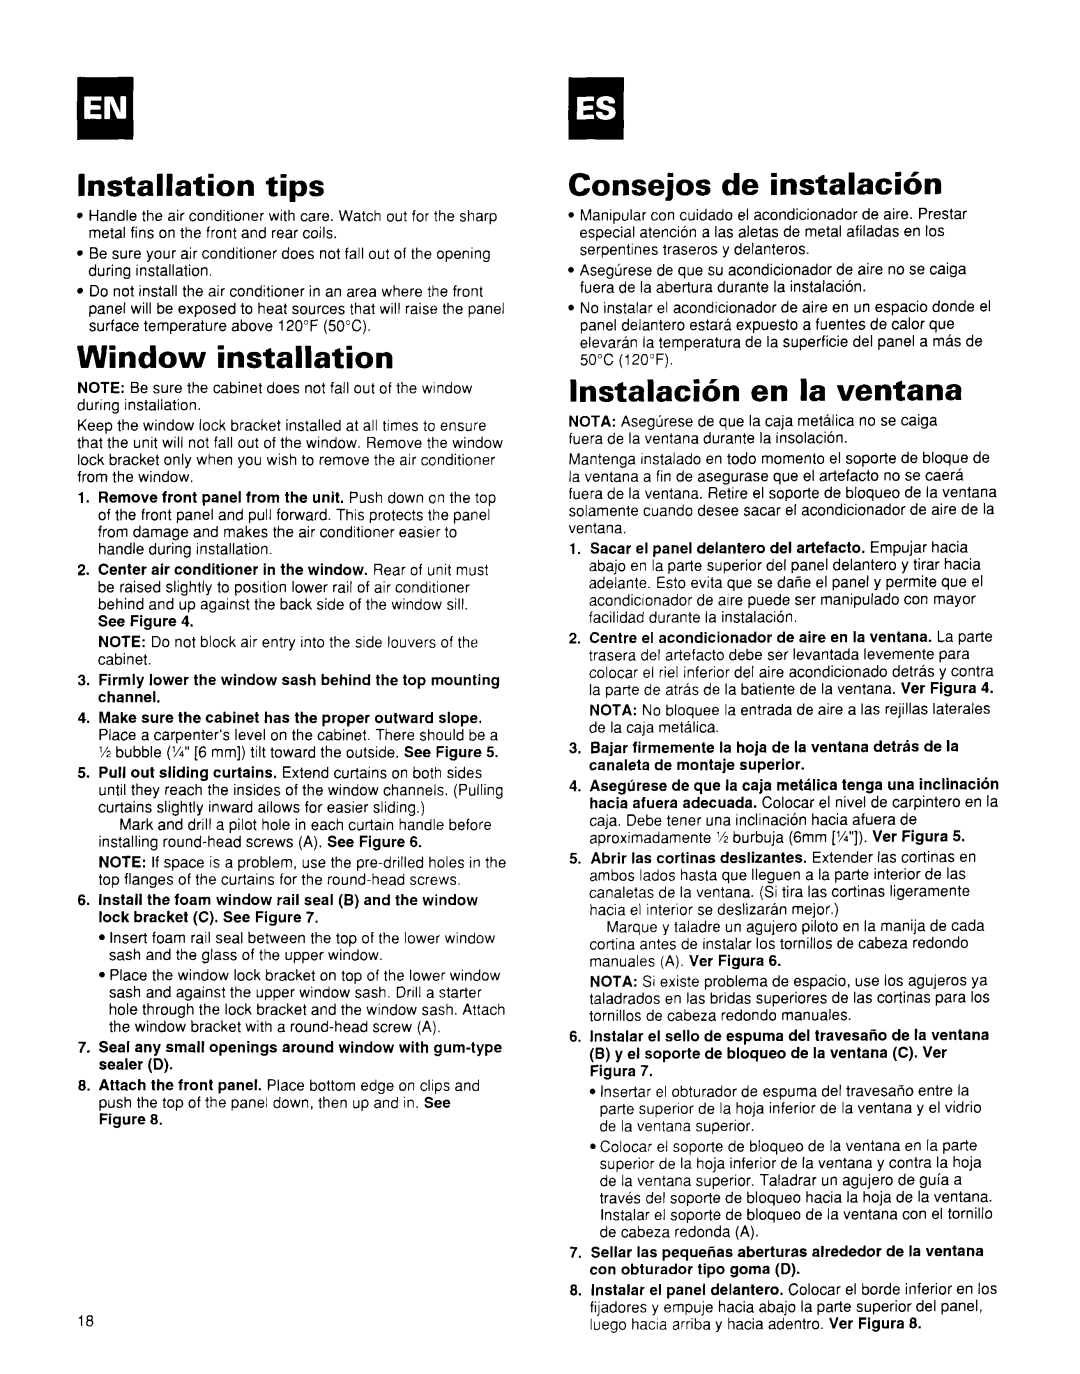 Whirlpool BHAC0600BS0 manual Installation tips, Window installation, Consejos de instalacih, Instalacih en la ventana 